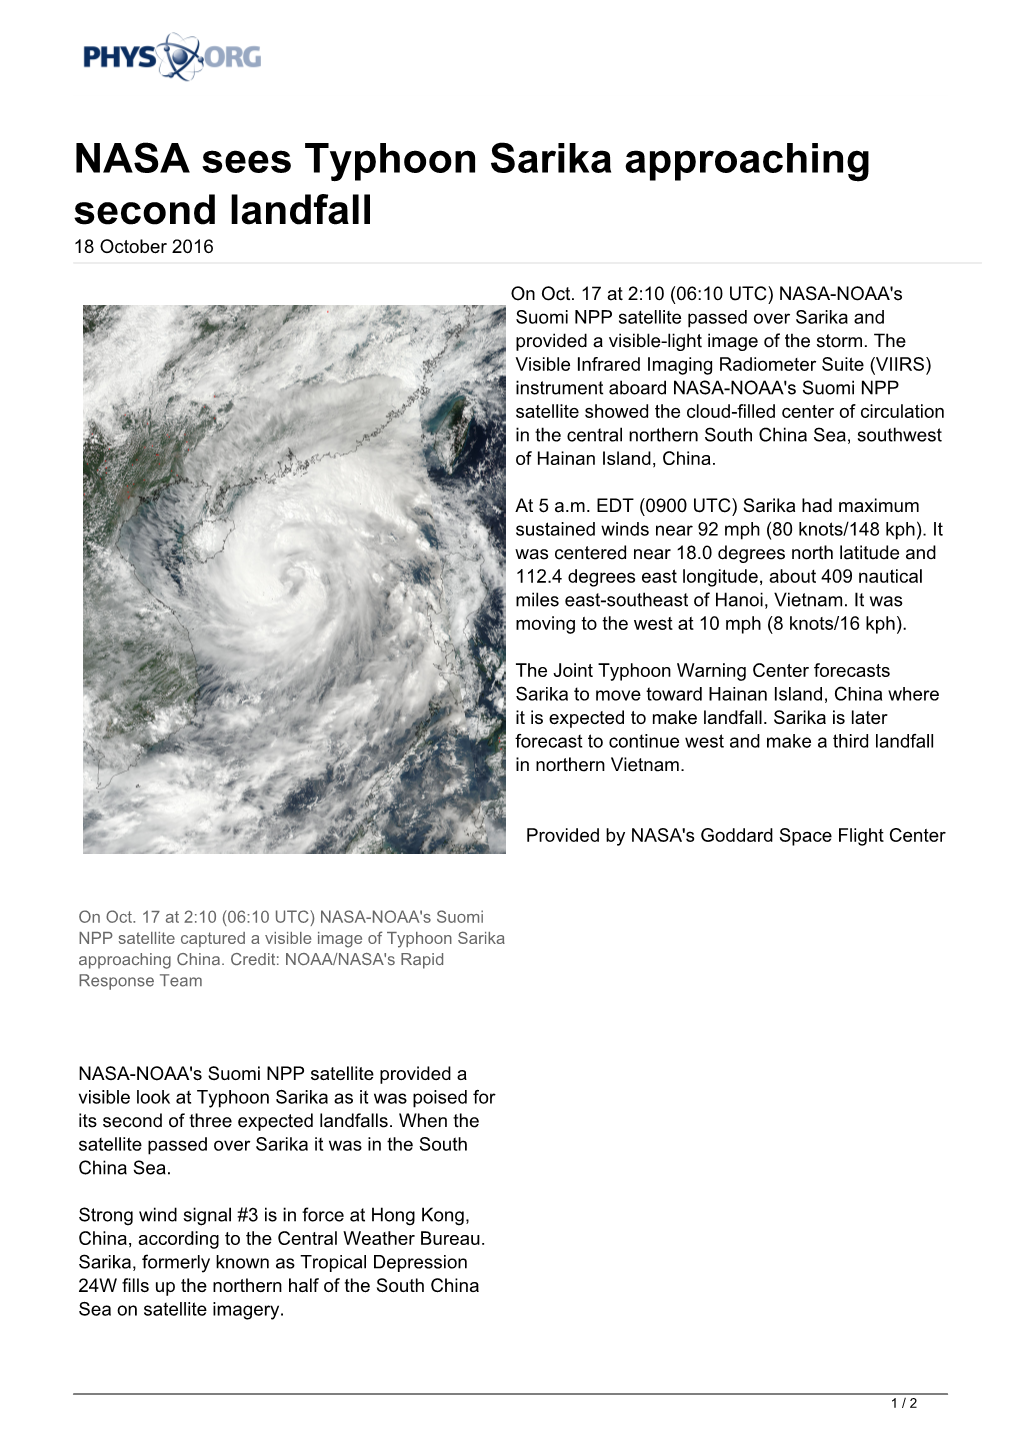 NASA Sees Typhoon Sarika Approaching Second Landfall 18 October 2016